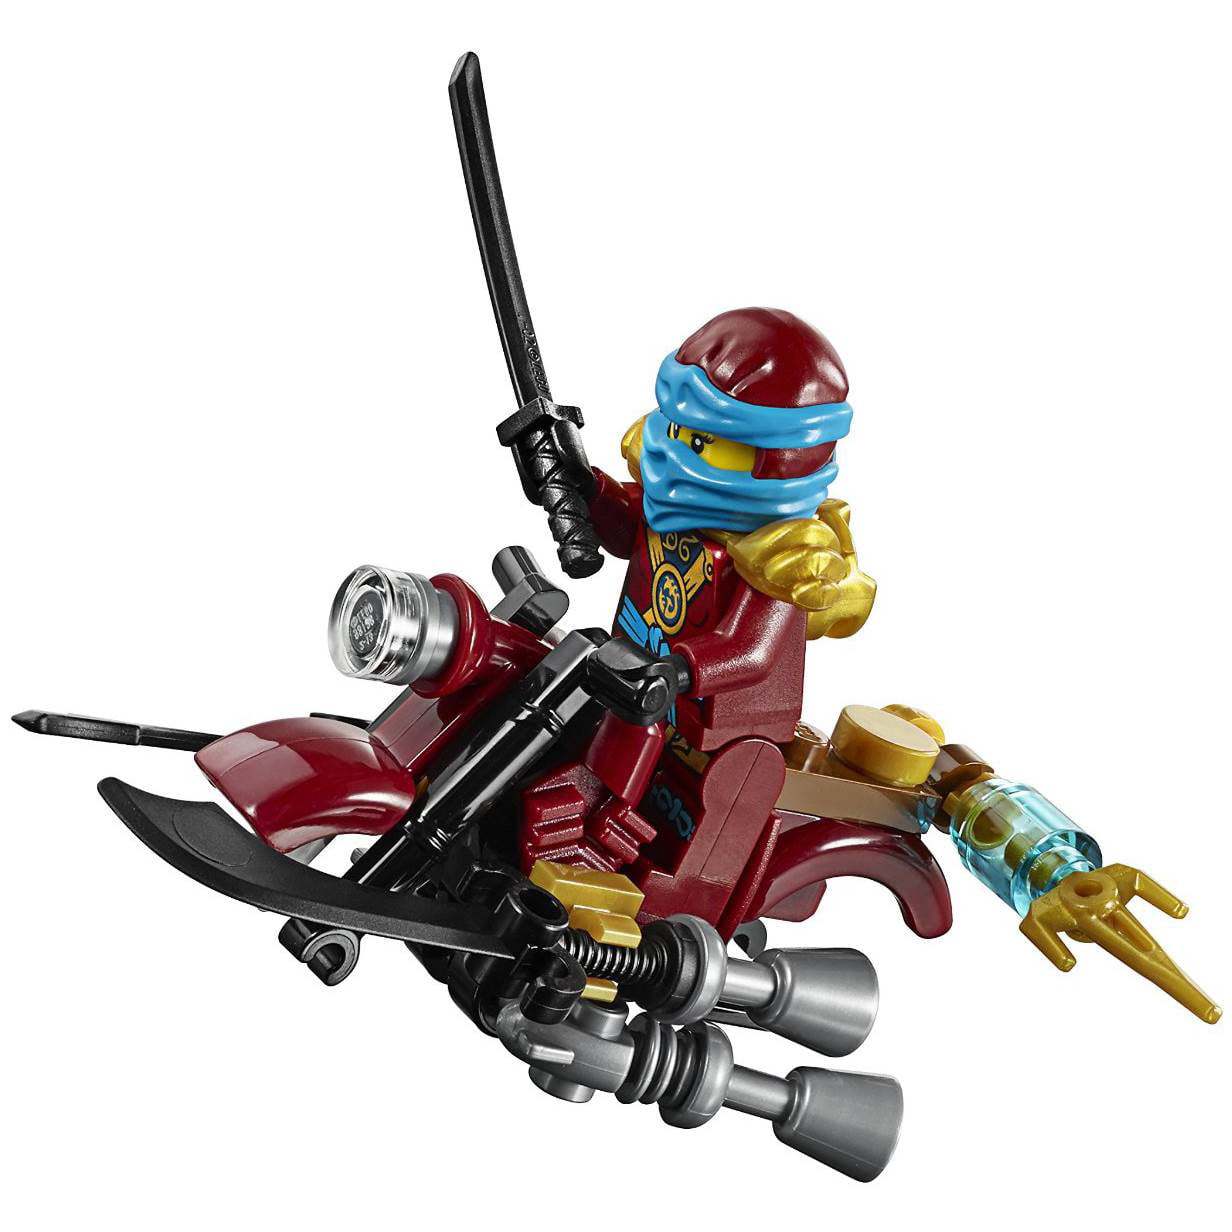 Lego Ninjago Master Wu with Weapon Minifigure Figure From Set 70738 